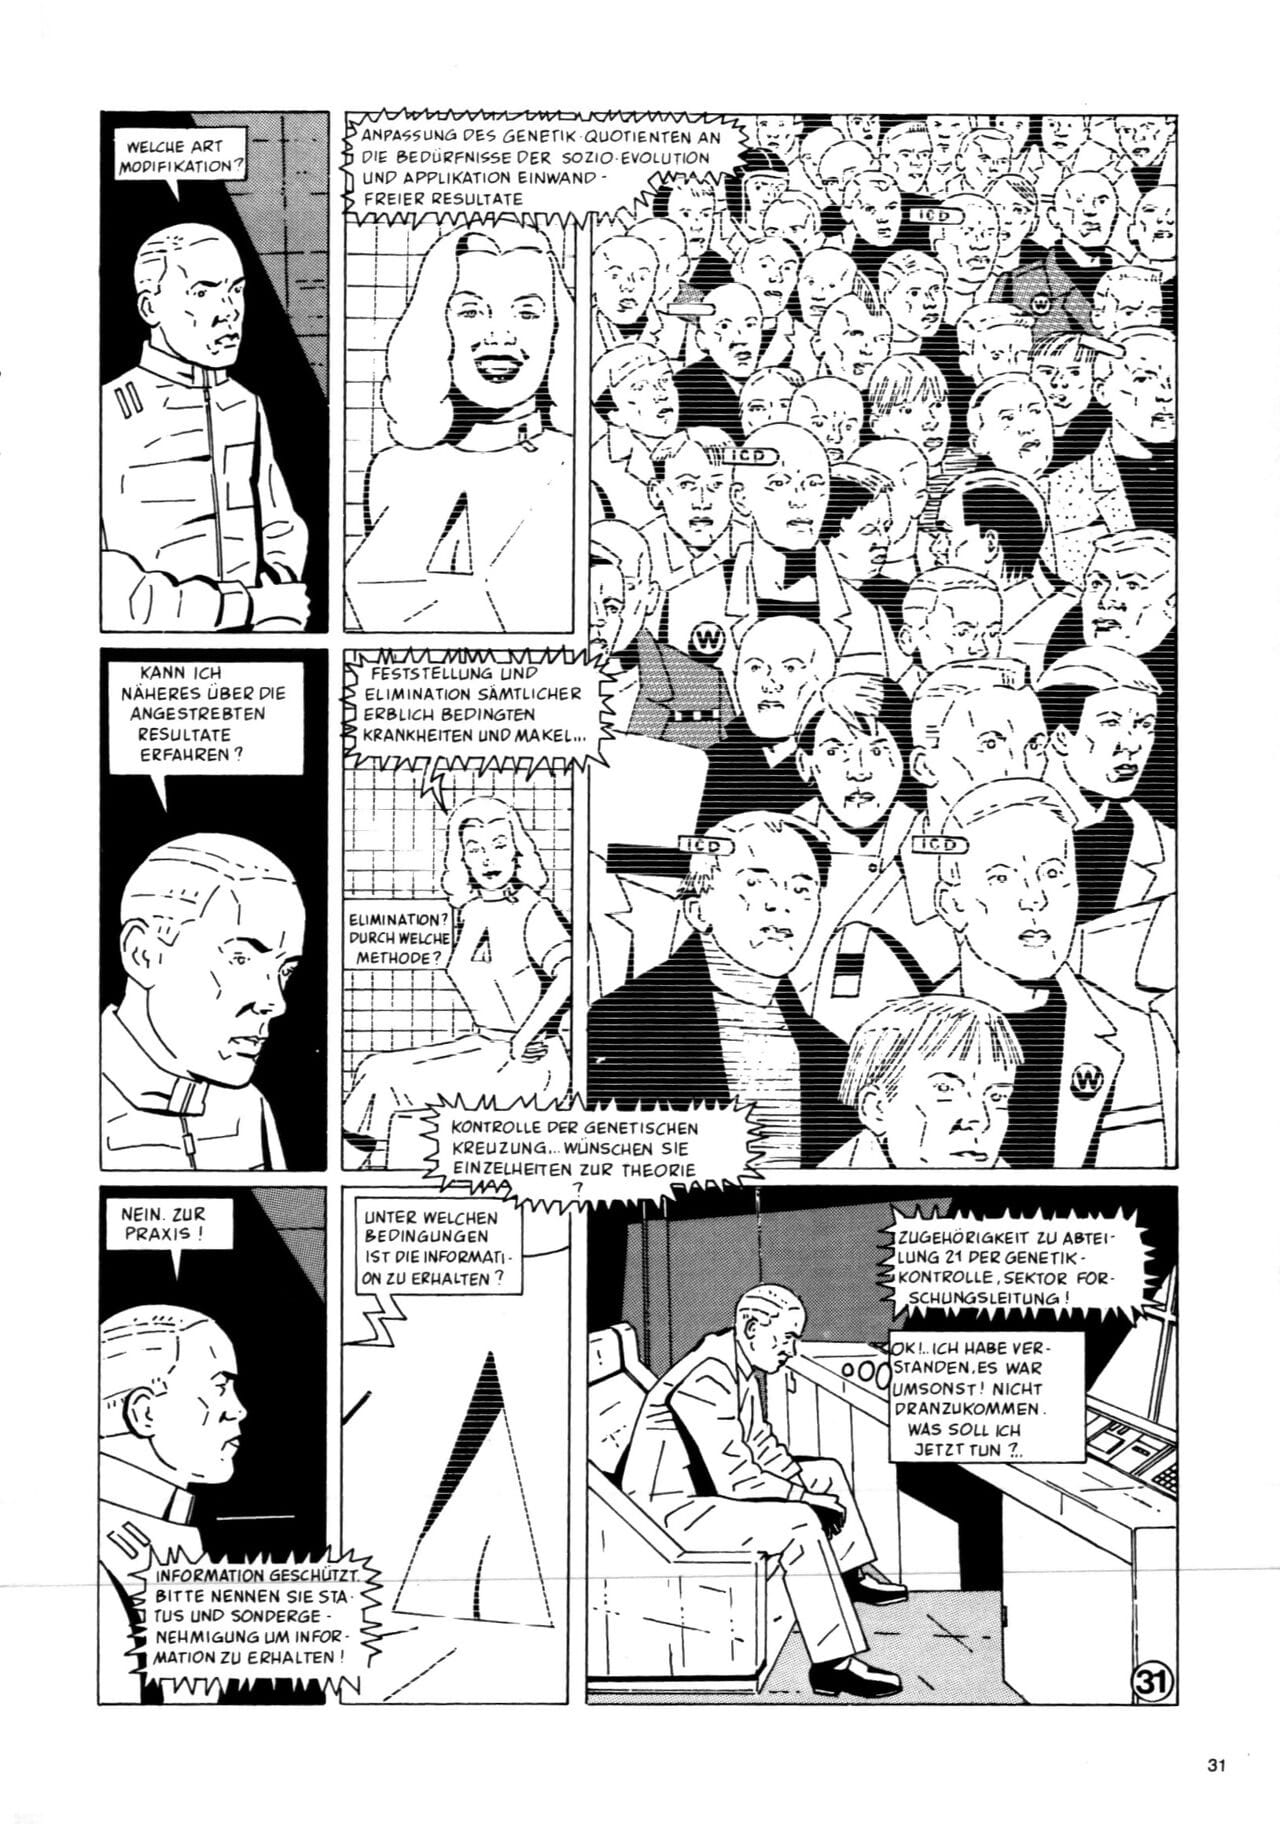 Schwermetall #080 - part 2 page 1